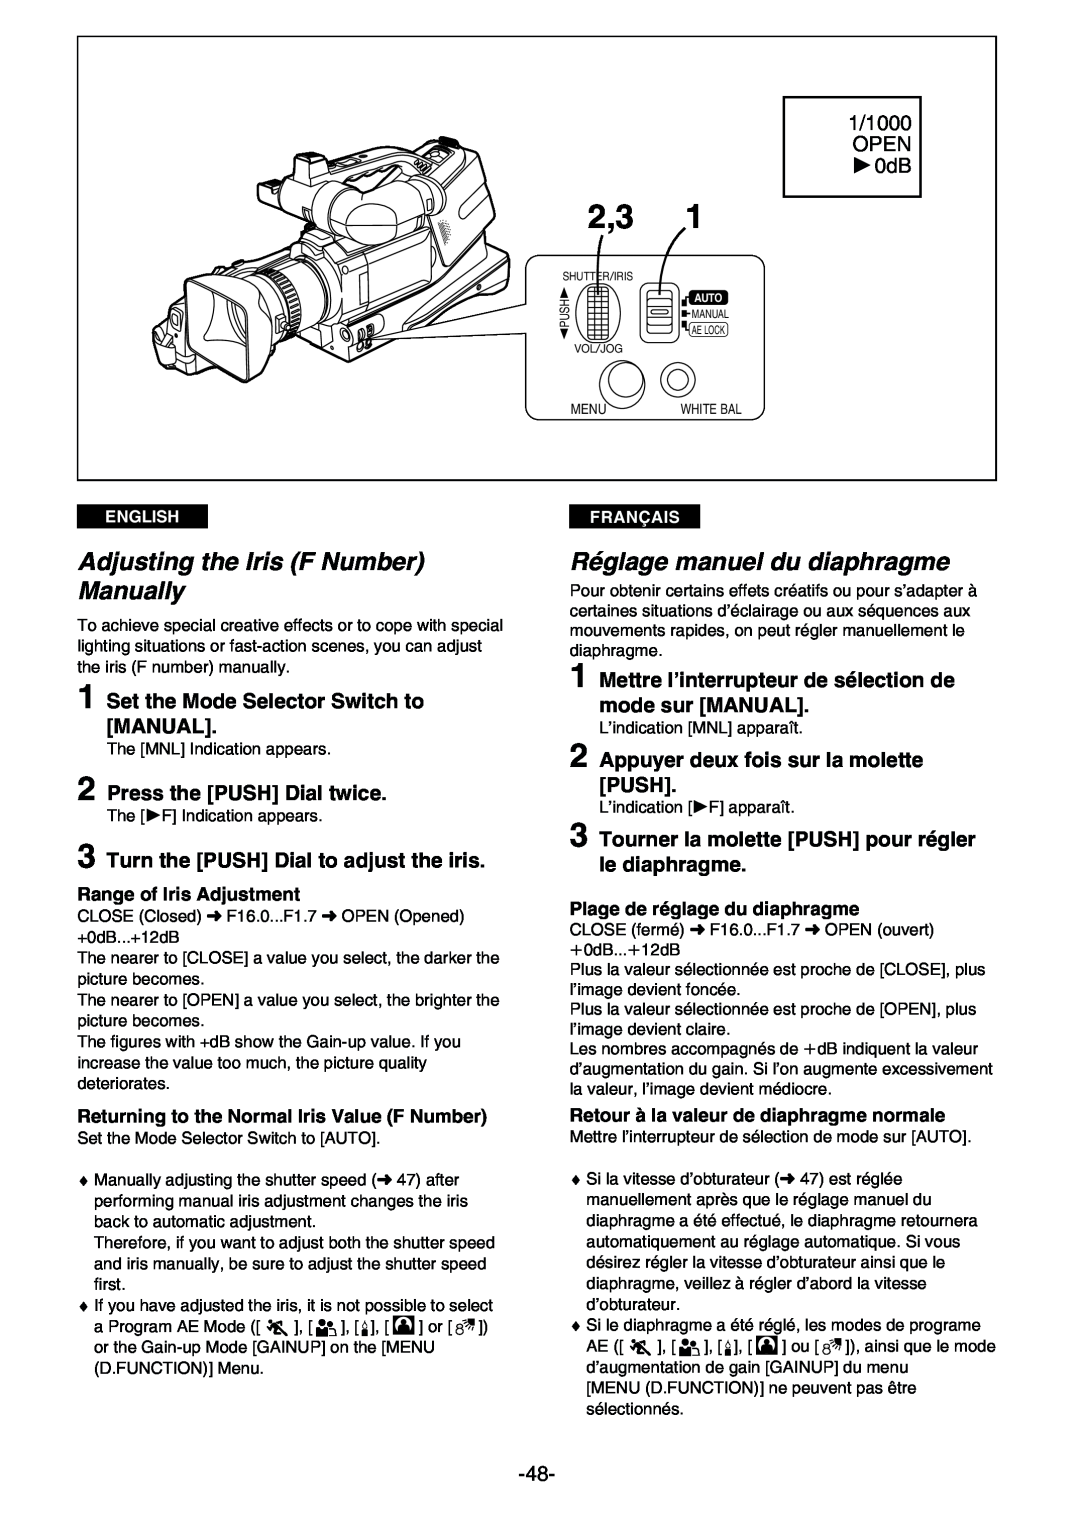 Panasonic AG- DVC 15P Adjusting the Iris F Number Manually, Réglage manuel du diaphragme, 1/1000, Open, 10dB, English 